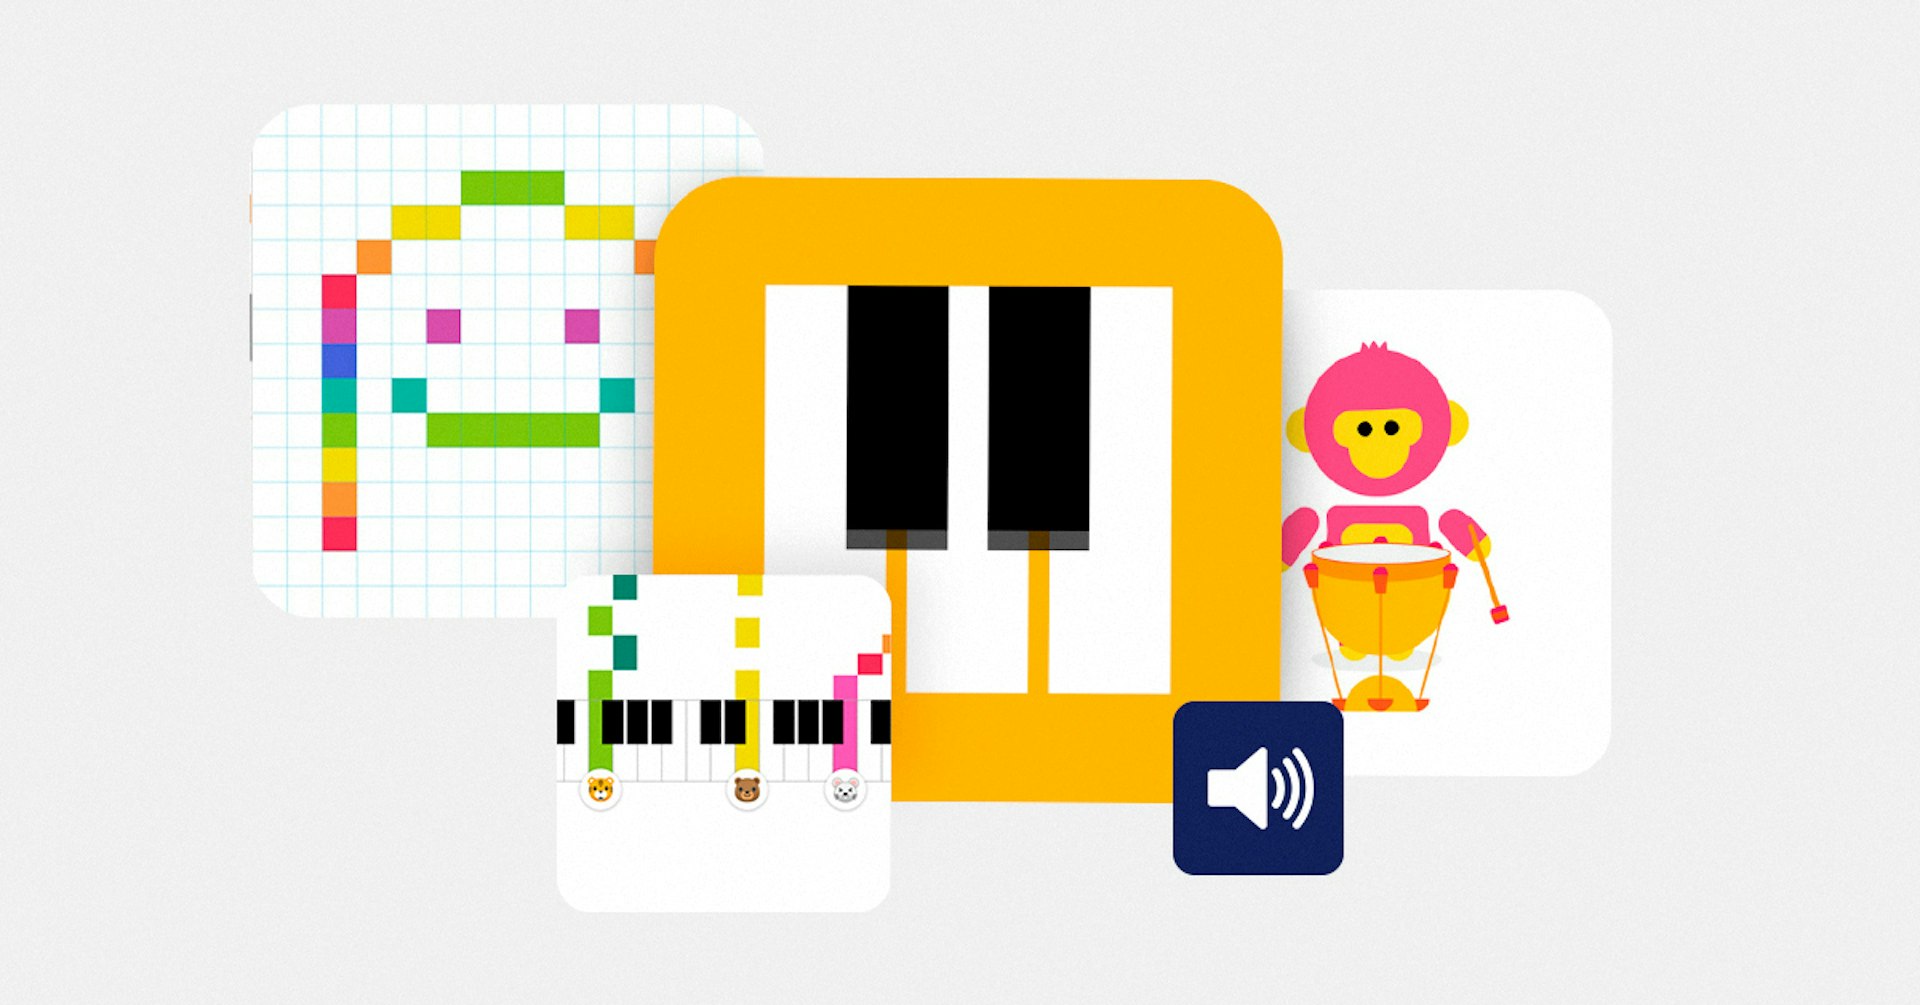 ¿Qué es chrome music lab? El laboratorio musical de Google Chrome